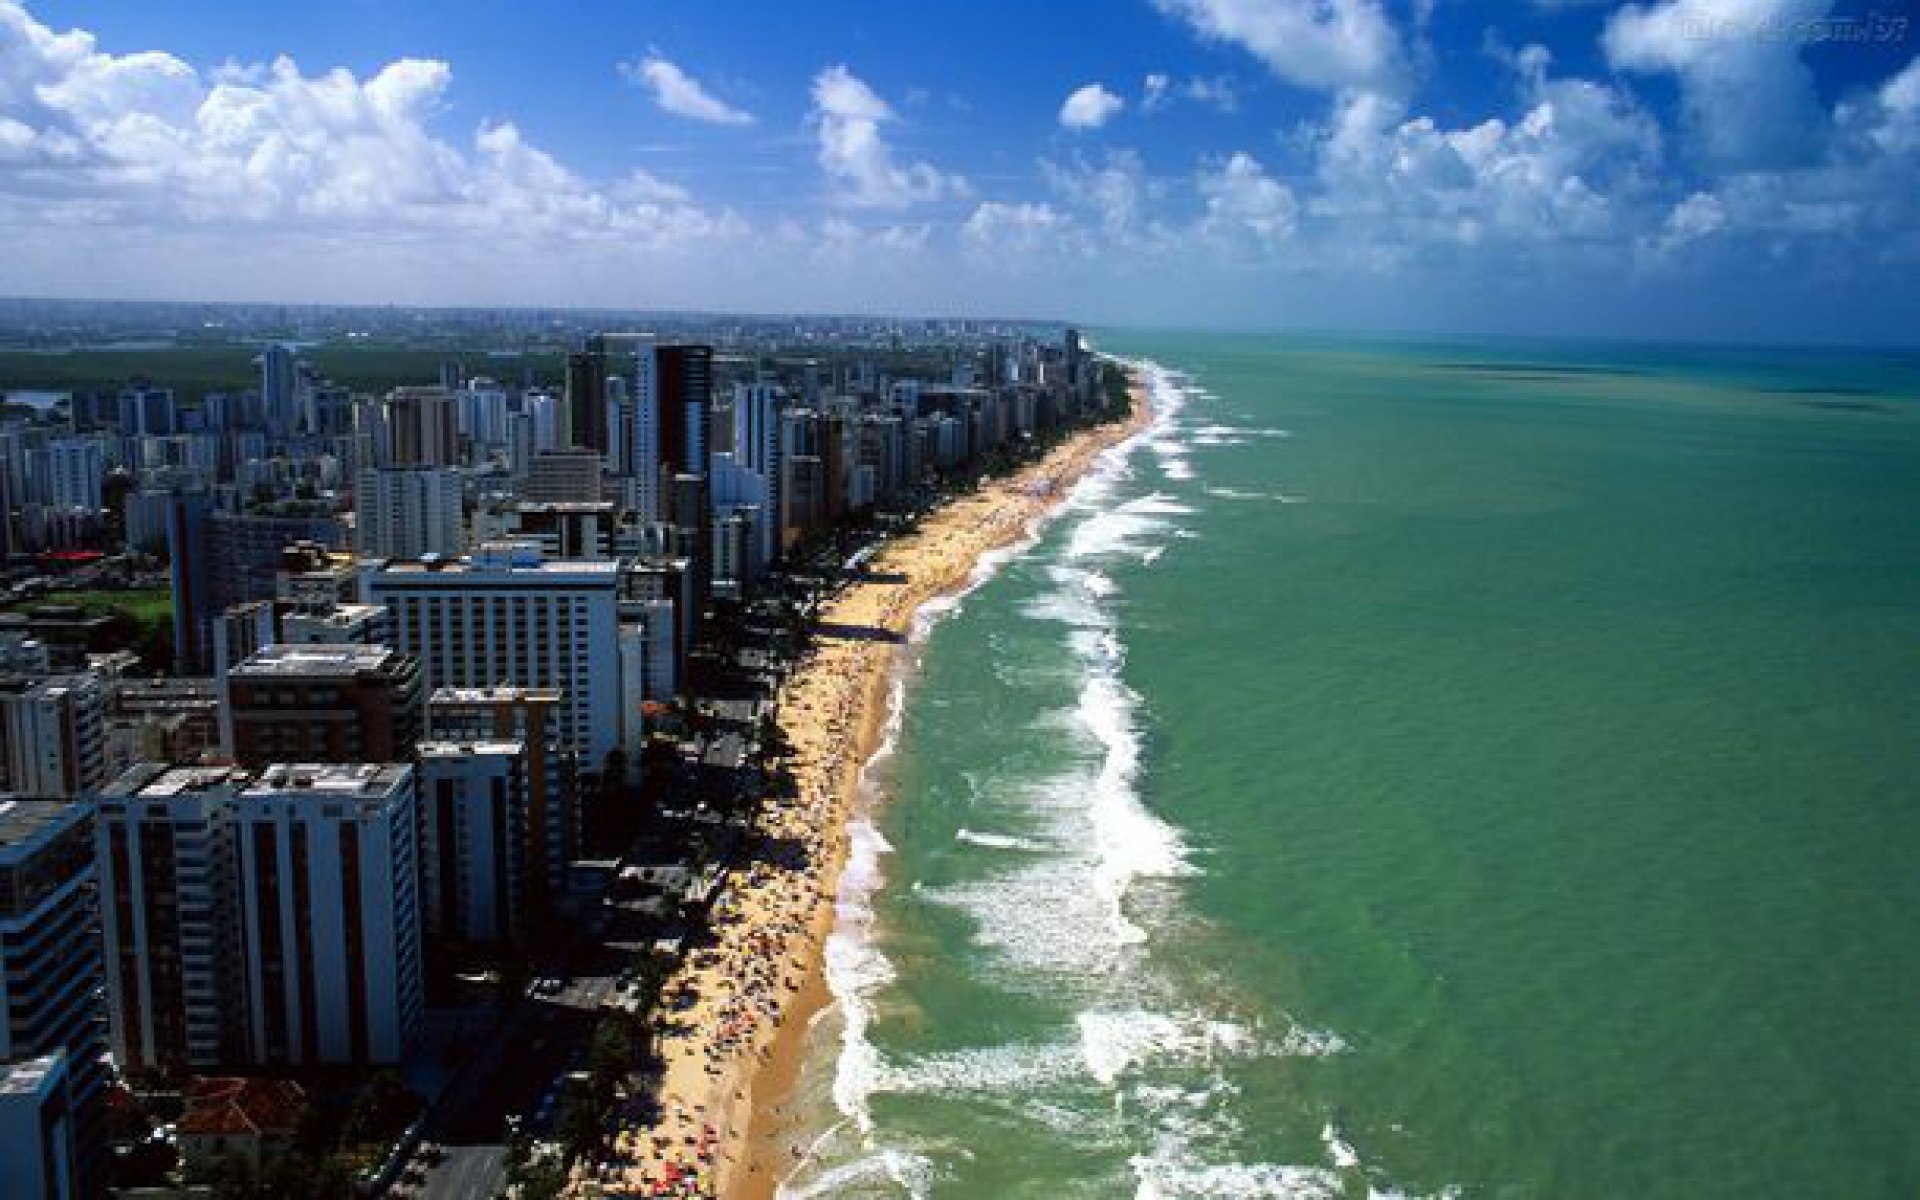 Boa-Viagem-Praia-Hotel-Recife-Brazil